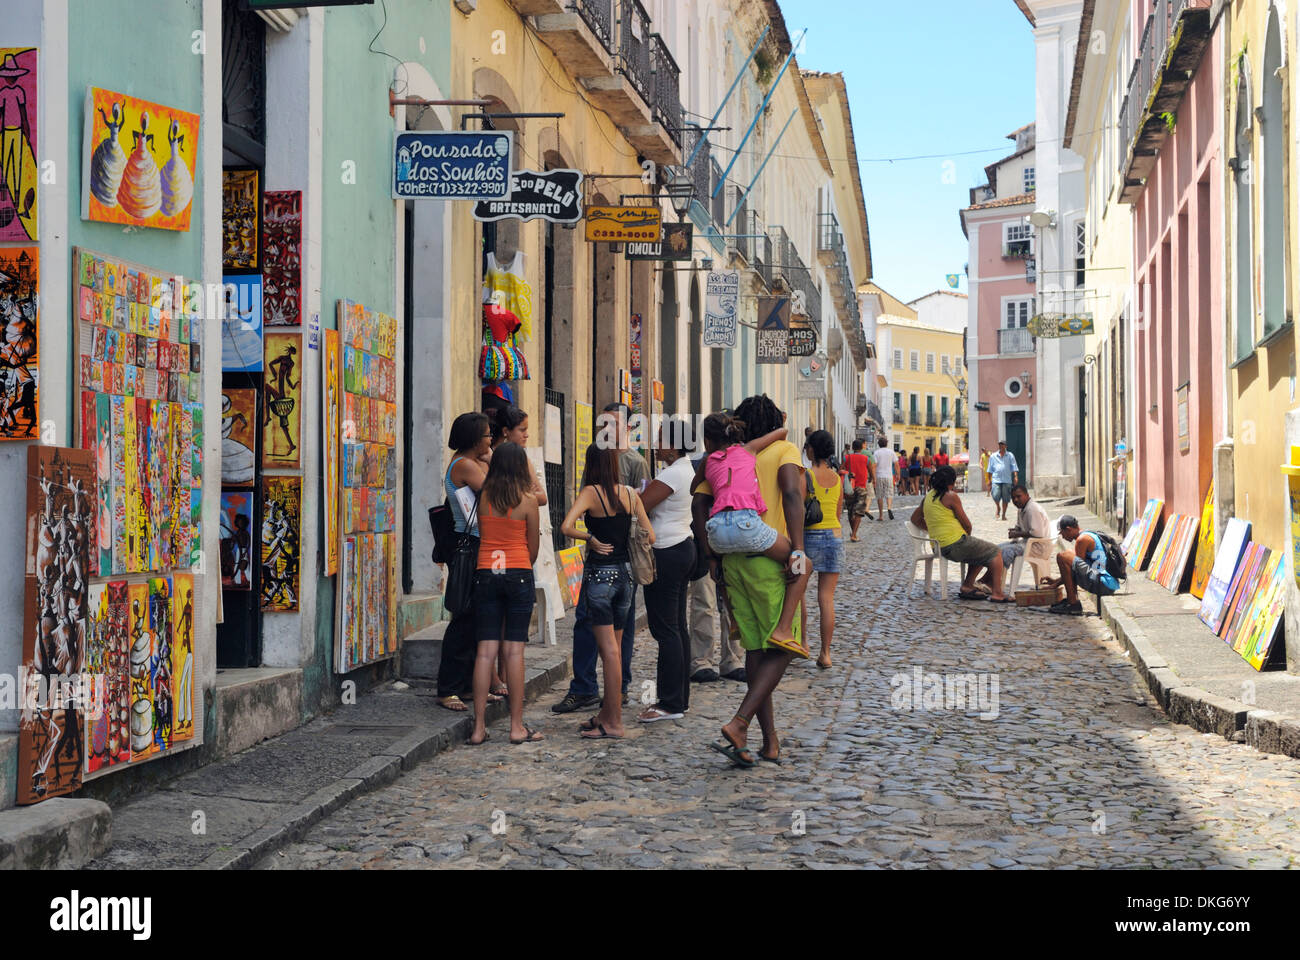 Brasilien, Bahia, Salvador: Touristen in Pelourinho, die wunderschön restaurierte Altstadt von Salvador de Bahia. Stockfoto